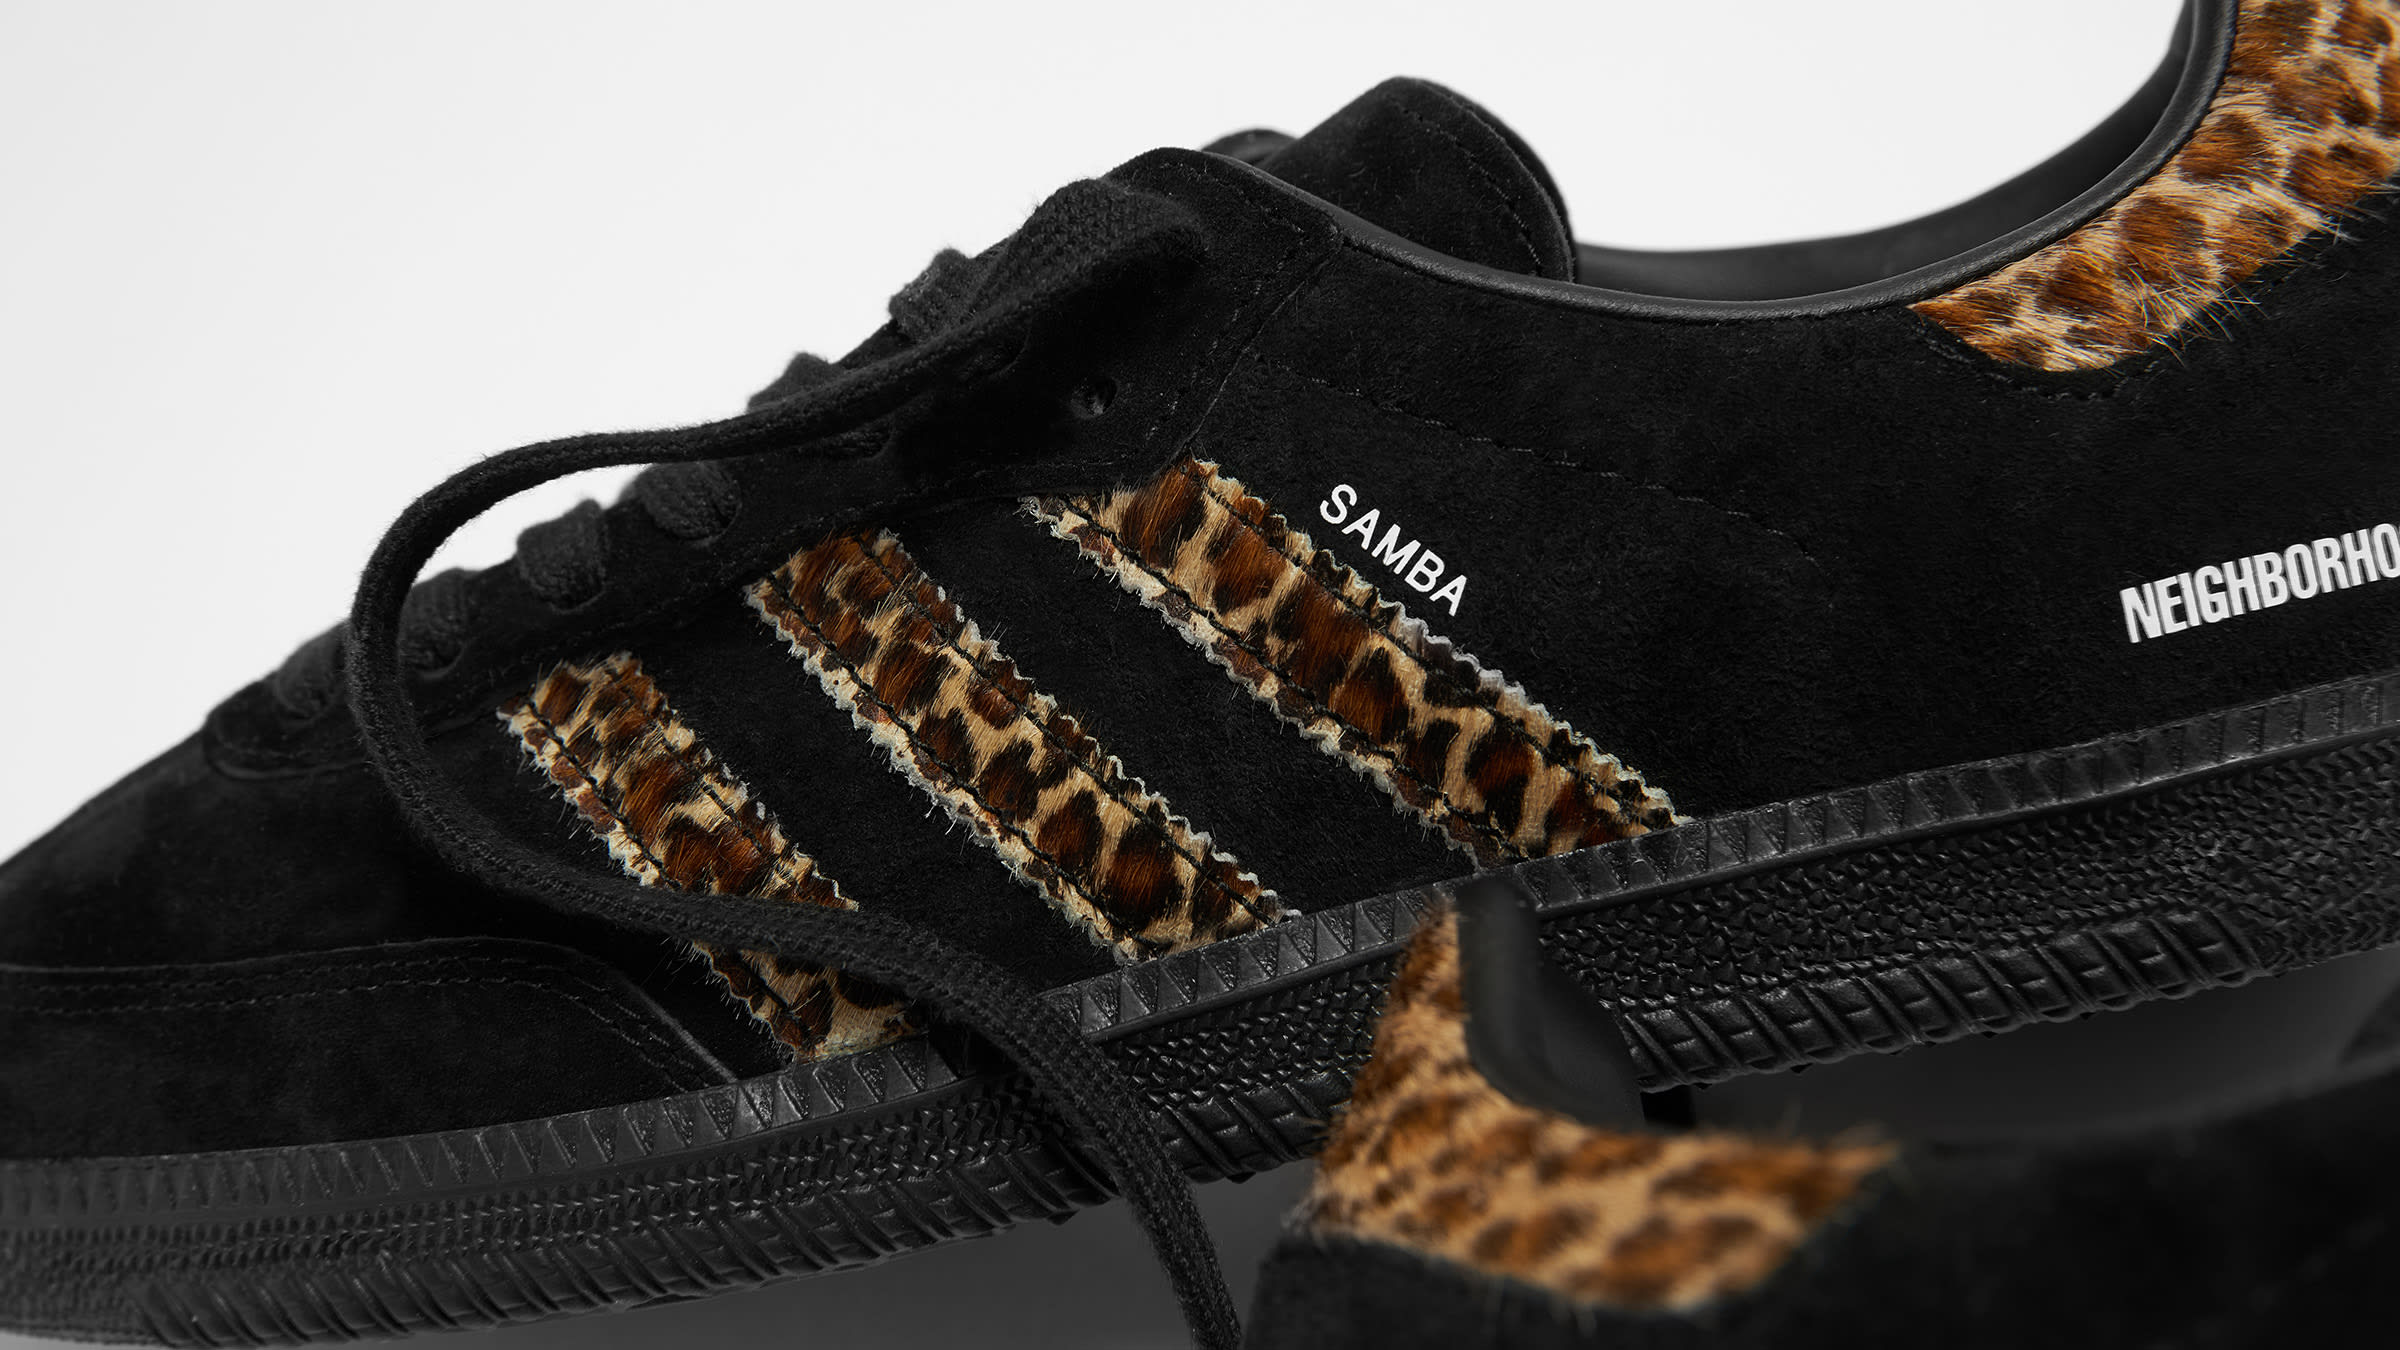 Adidas Самба леопард. Adidas Samba расцветки. Адидас Самба леопард. Леопардовые самба адидас